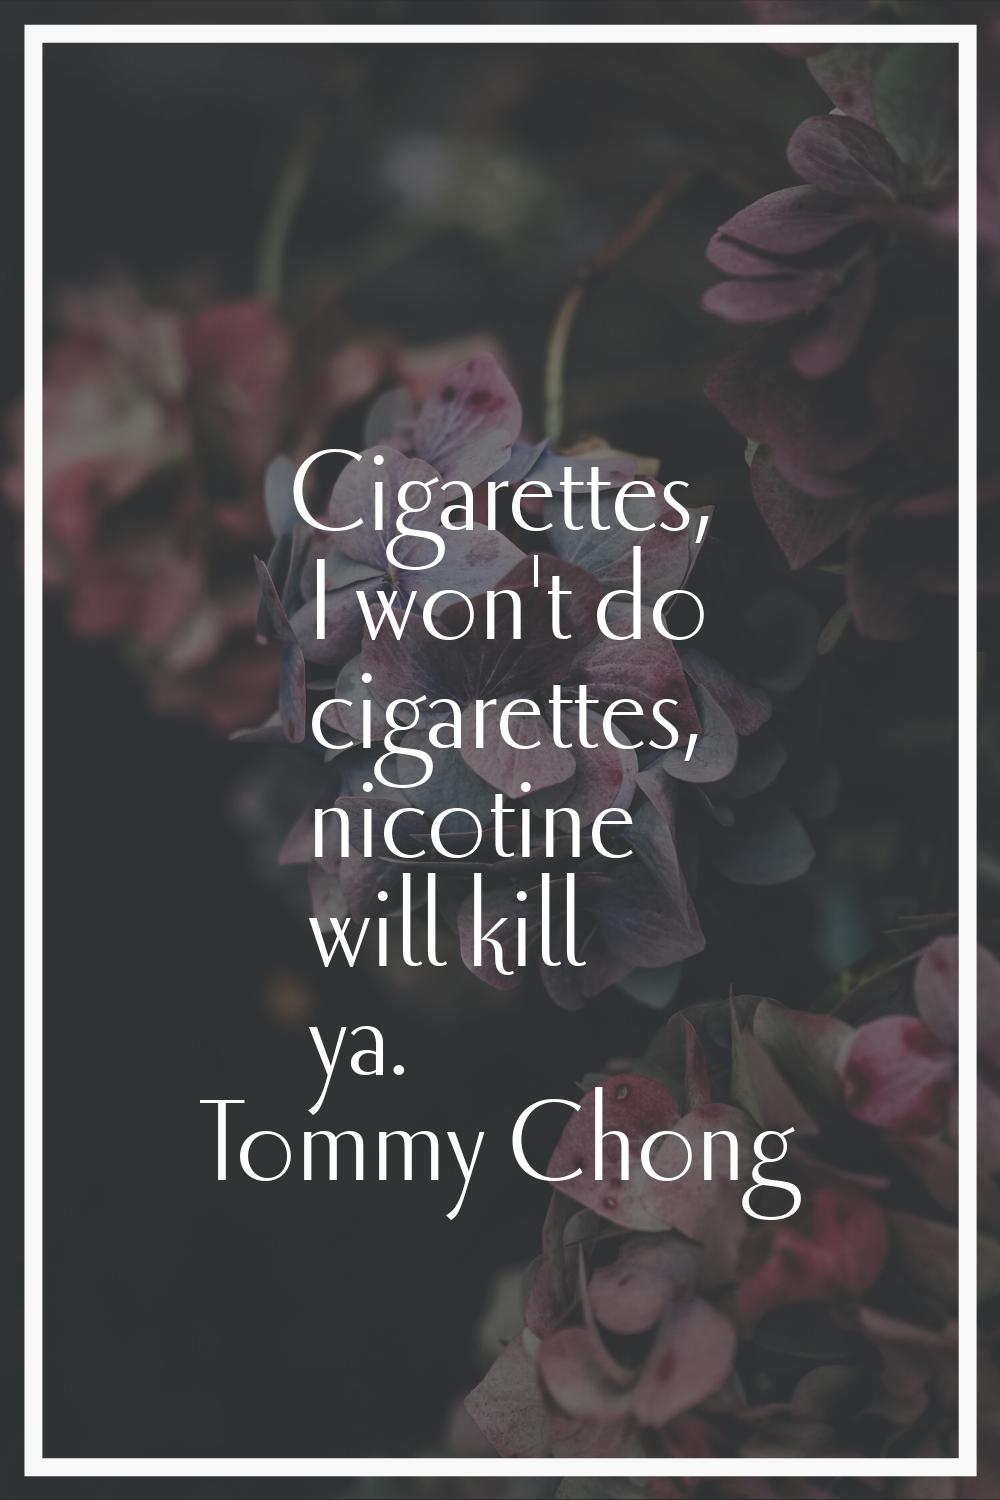 Cigarettes, I won't do cigarettes, nicotine will kill ya.